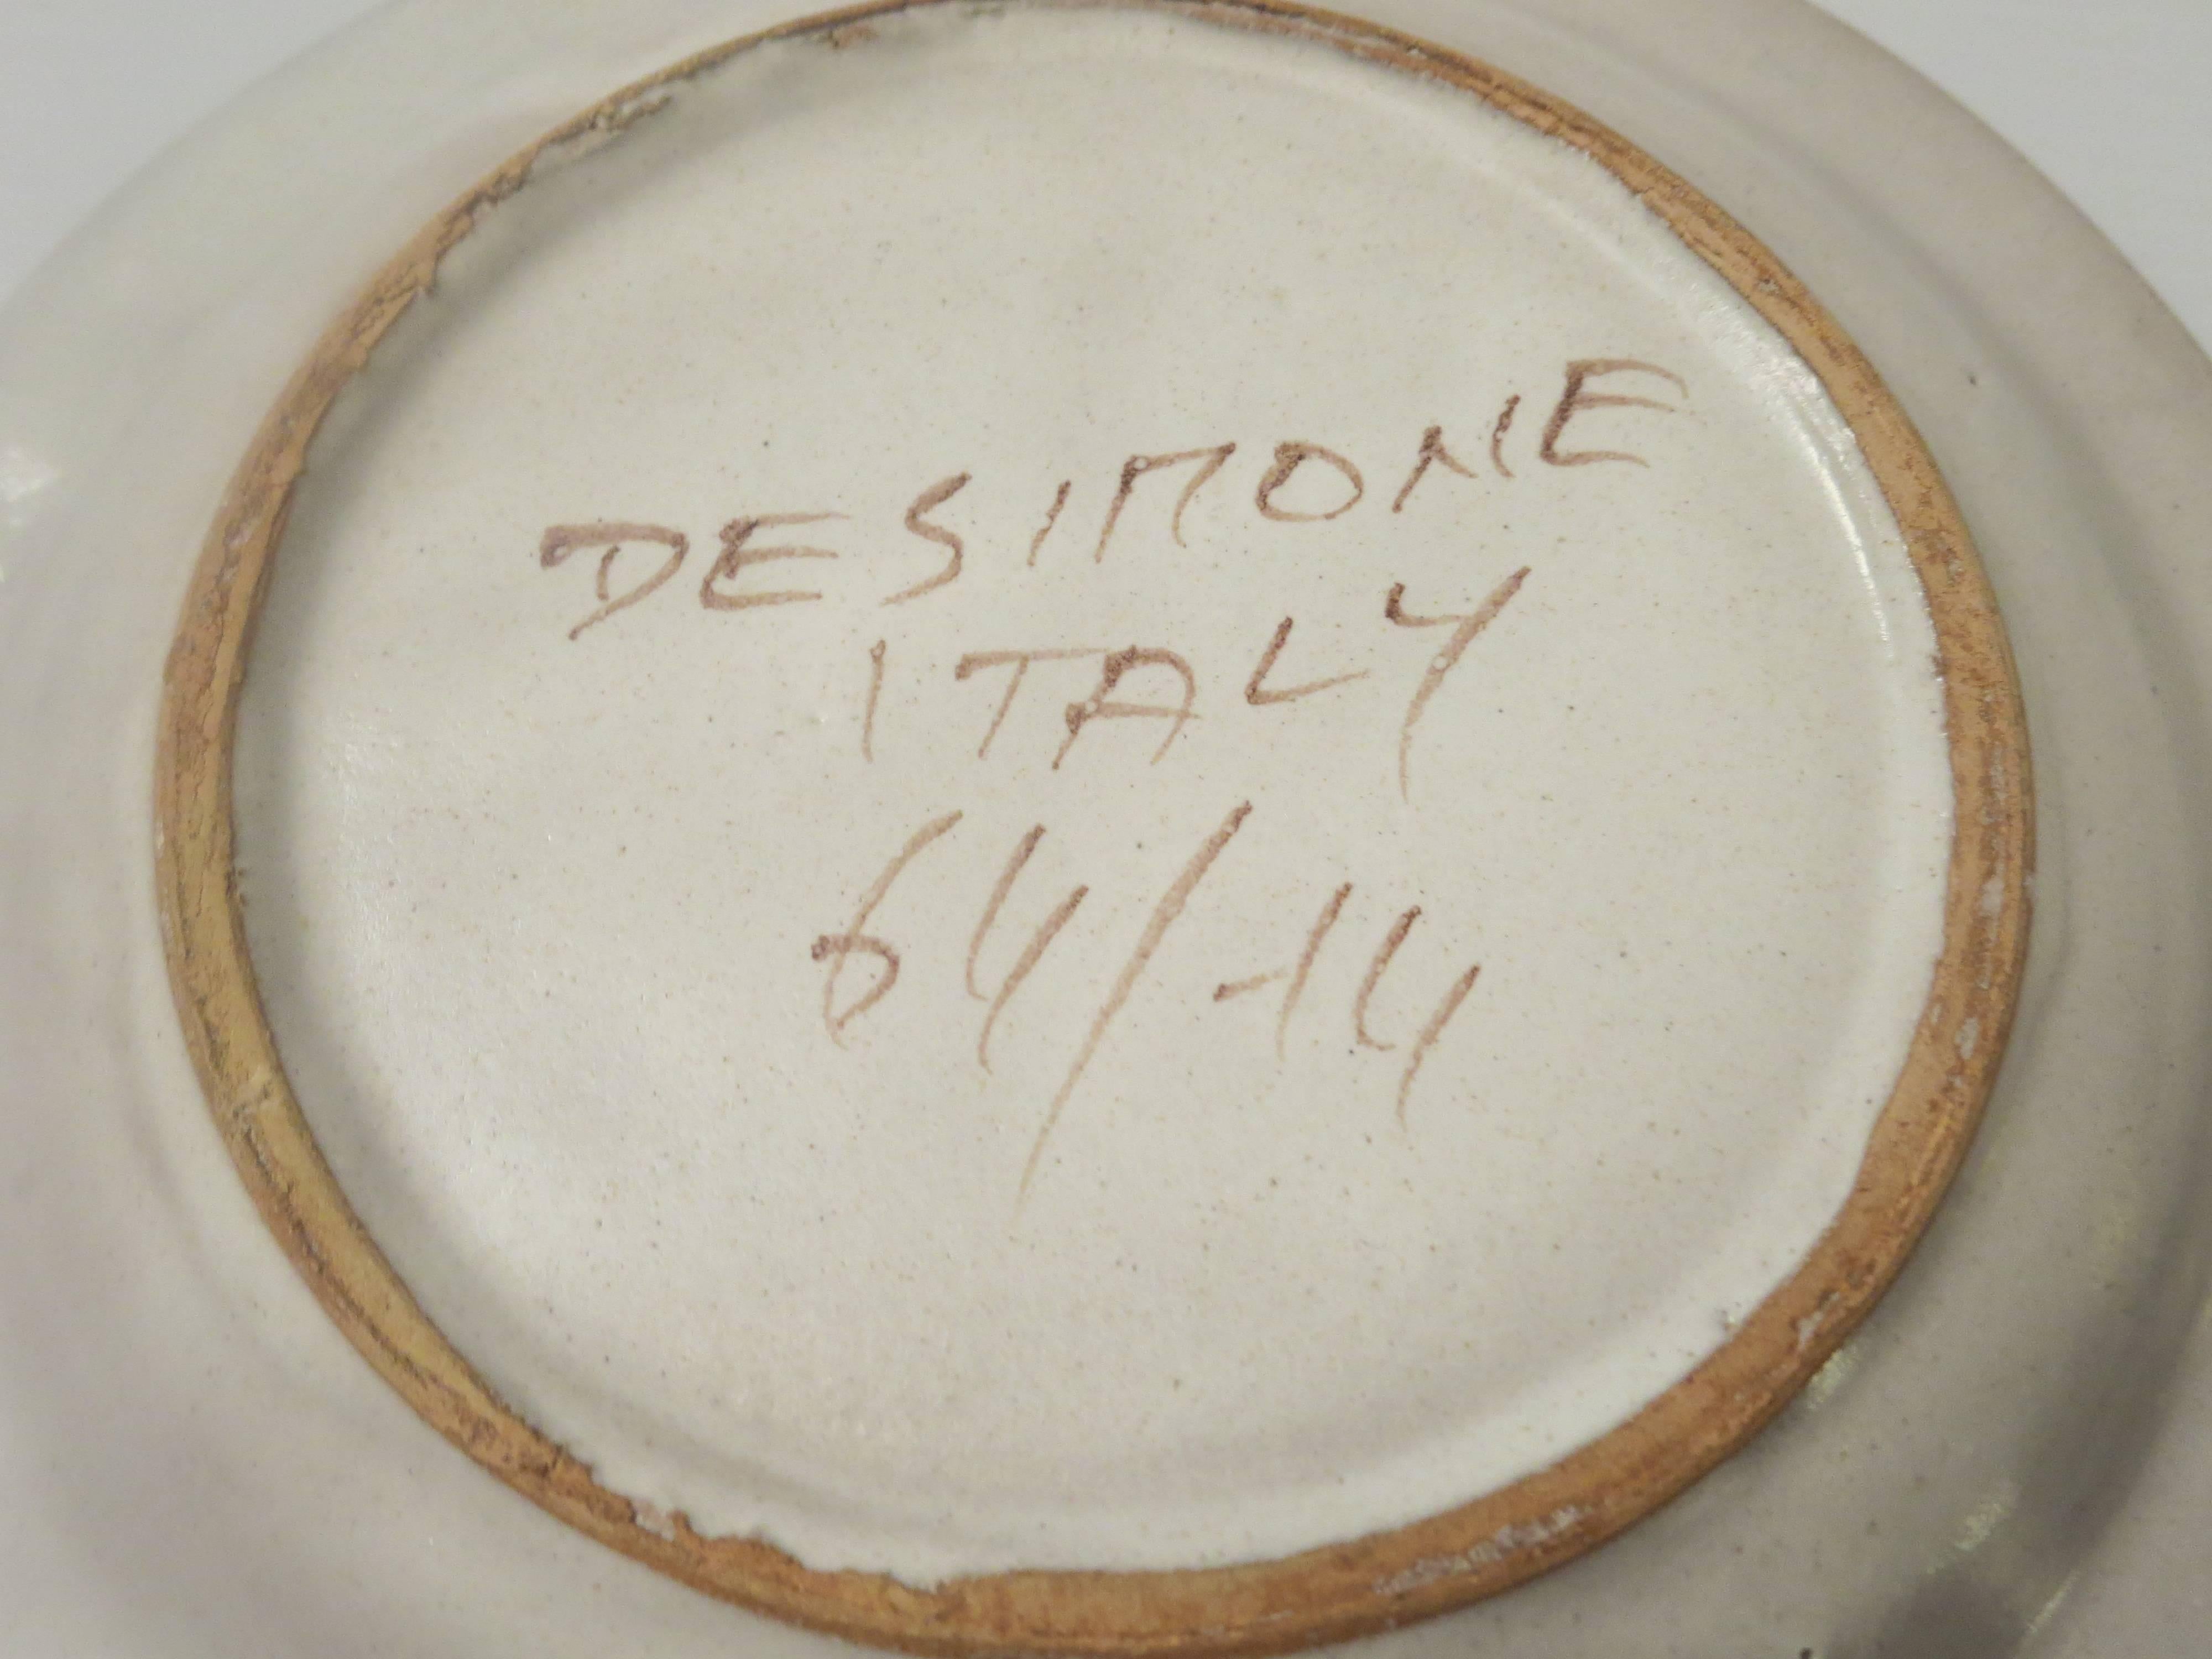 Pottery Pair of Decorative Hand-Painted Italian Ceramic Plates by DeSimone